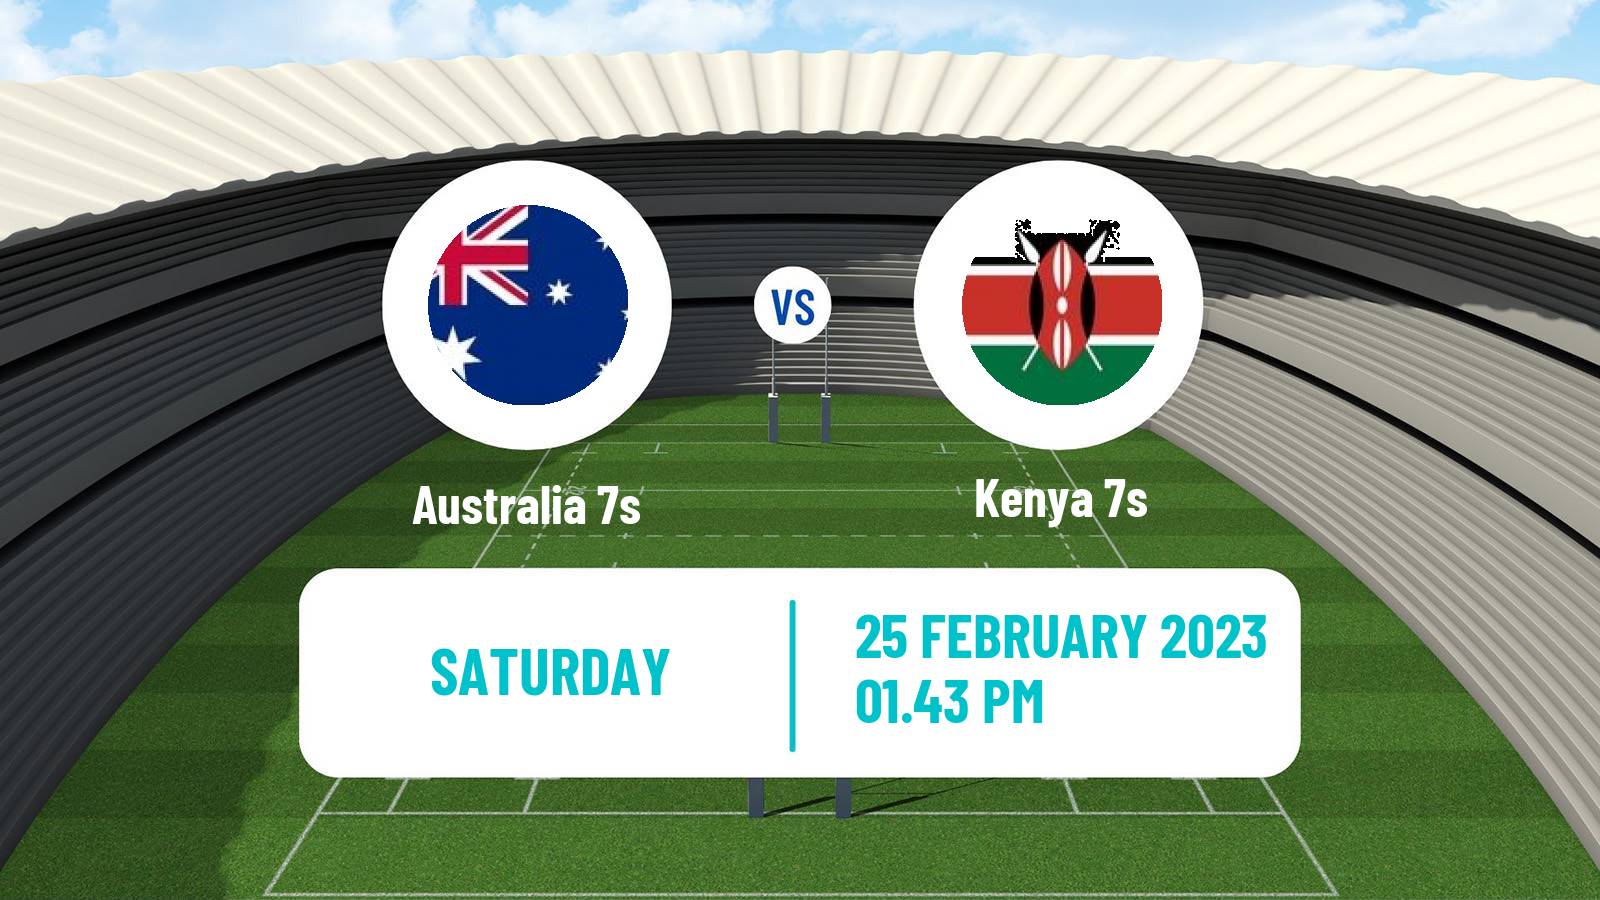 Rugby union Sevens World Series - USA Australia 7s - Kenya 7s